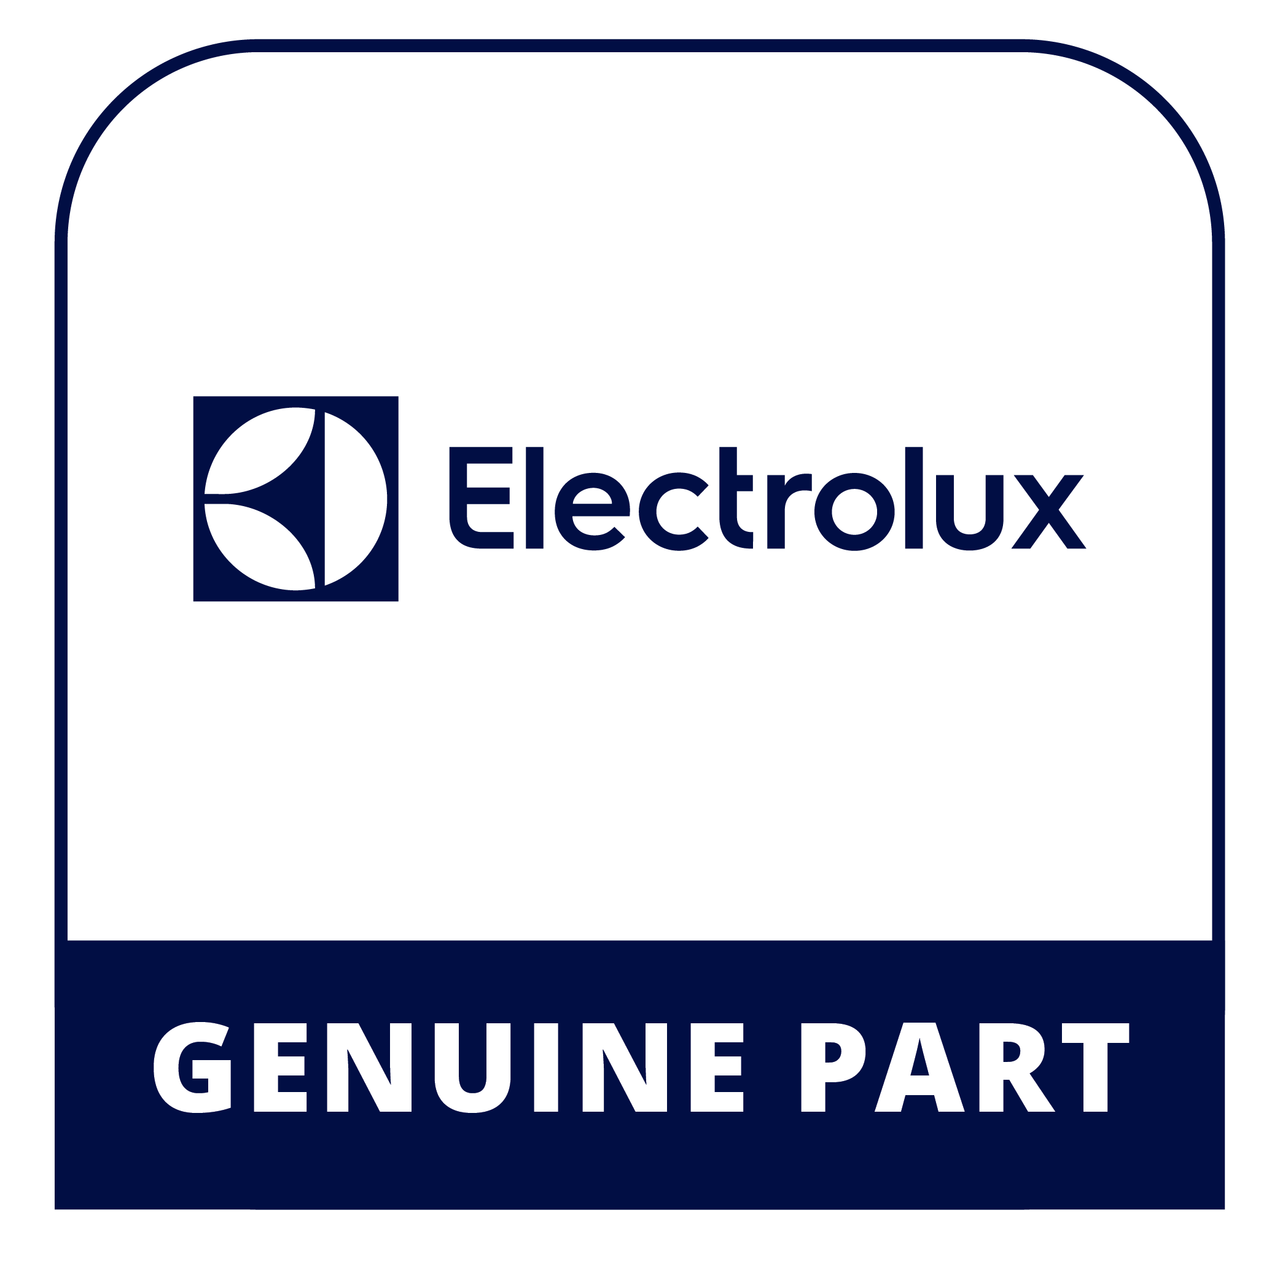 Frigidaire - Electrolux 242216701 - Control Box - Genuine Electrolux Part